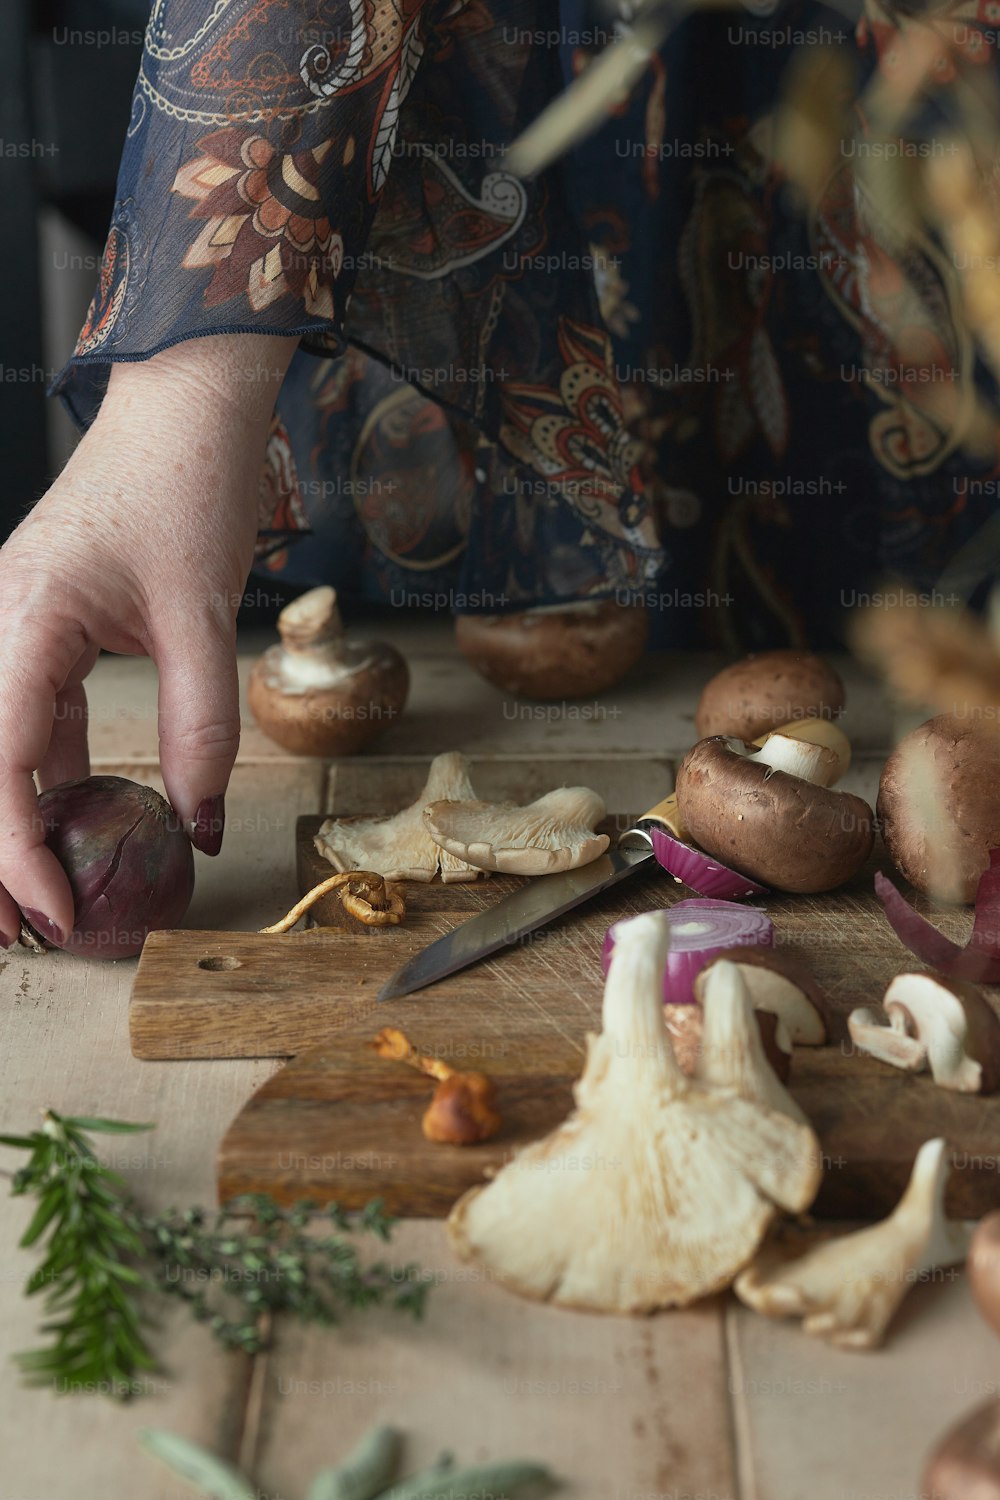 a person cutting mushrooms on a cutting board